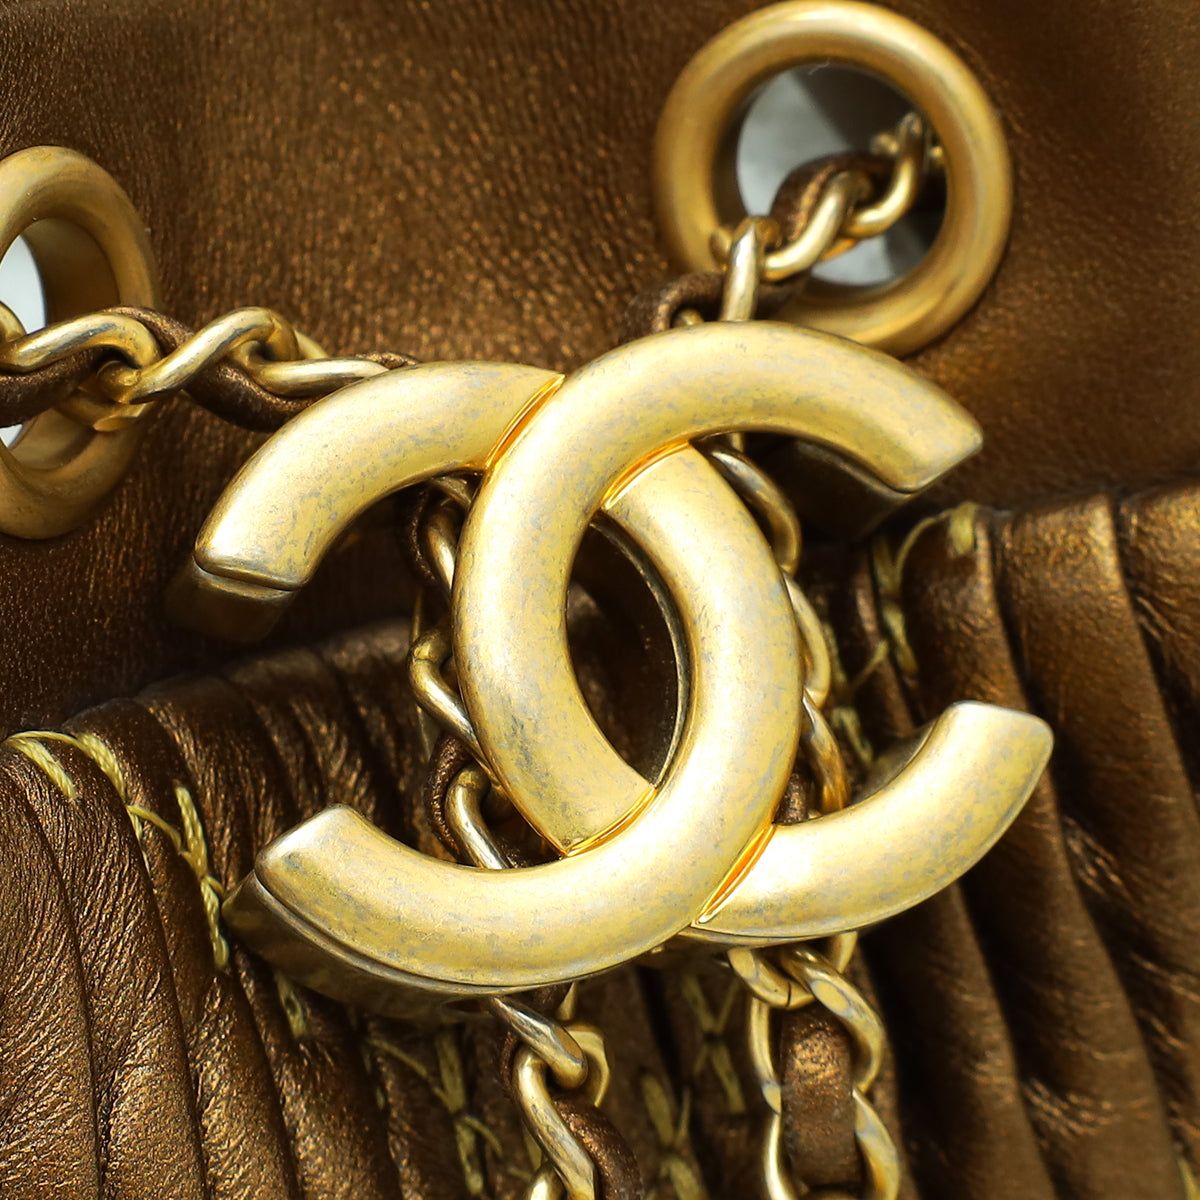 Chanel Metallic Bronze Small Coco Pleats Drawstring Bucket Bag